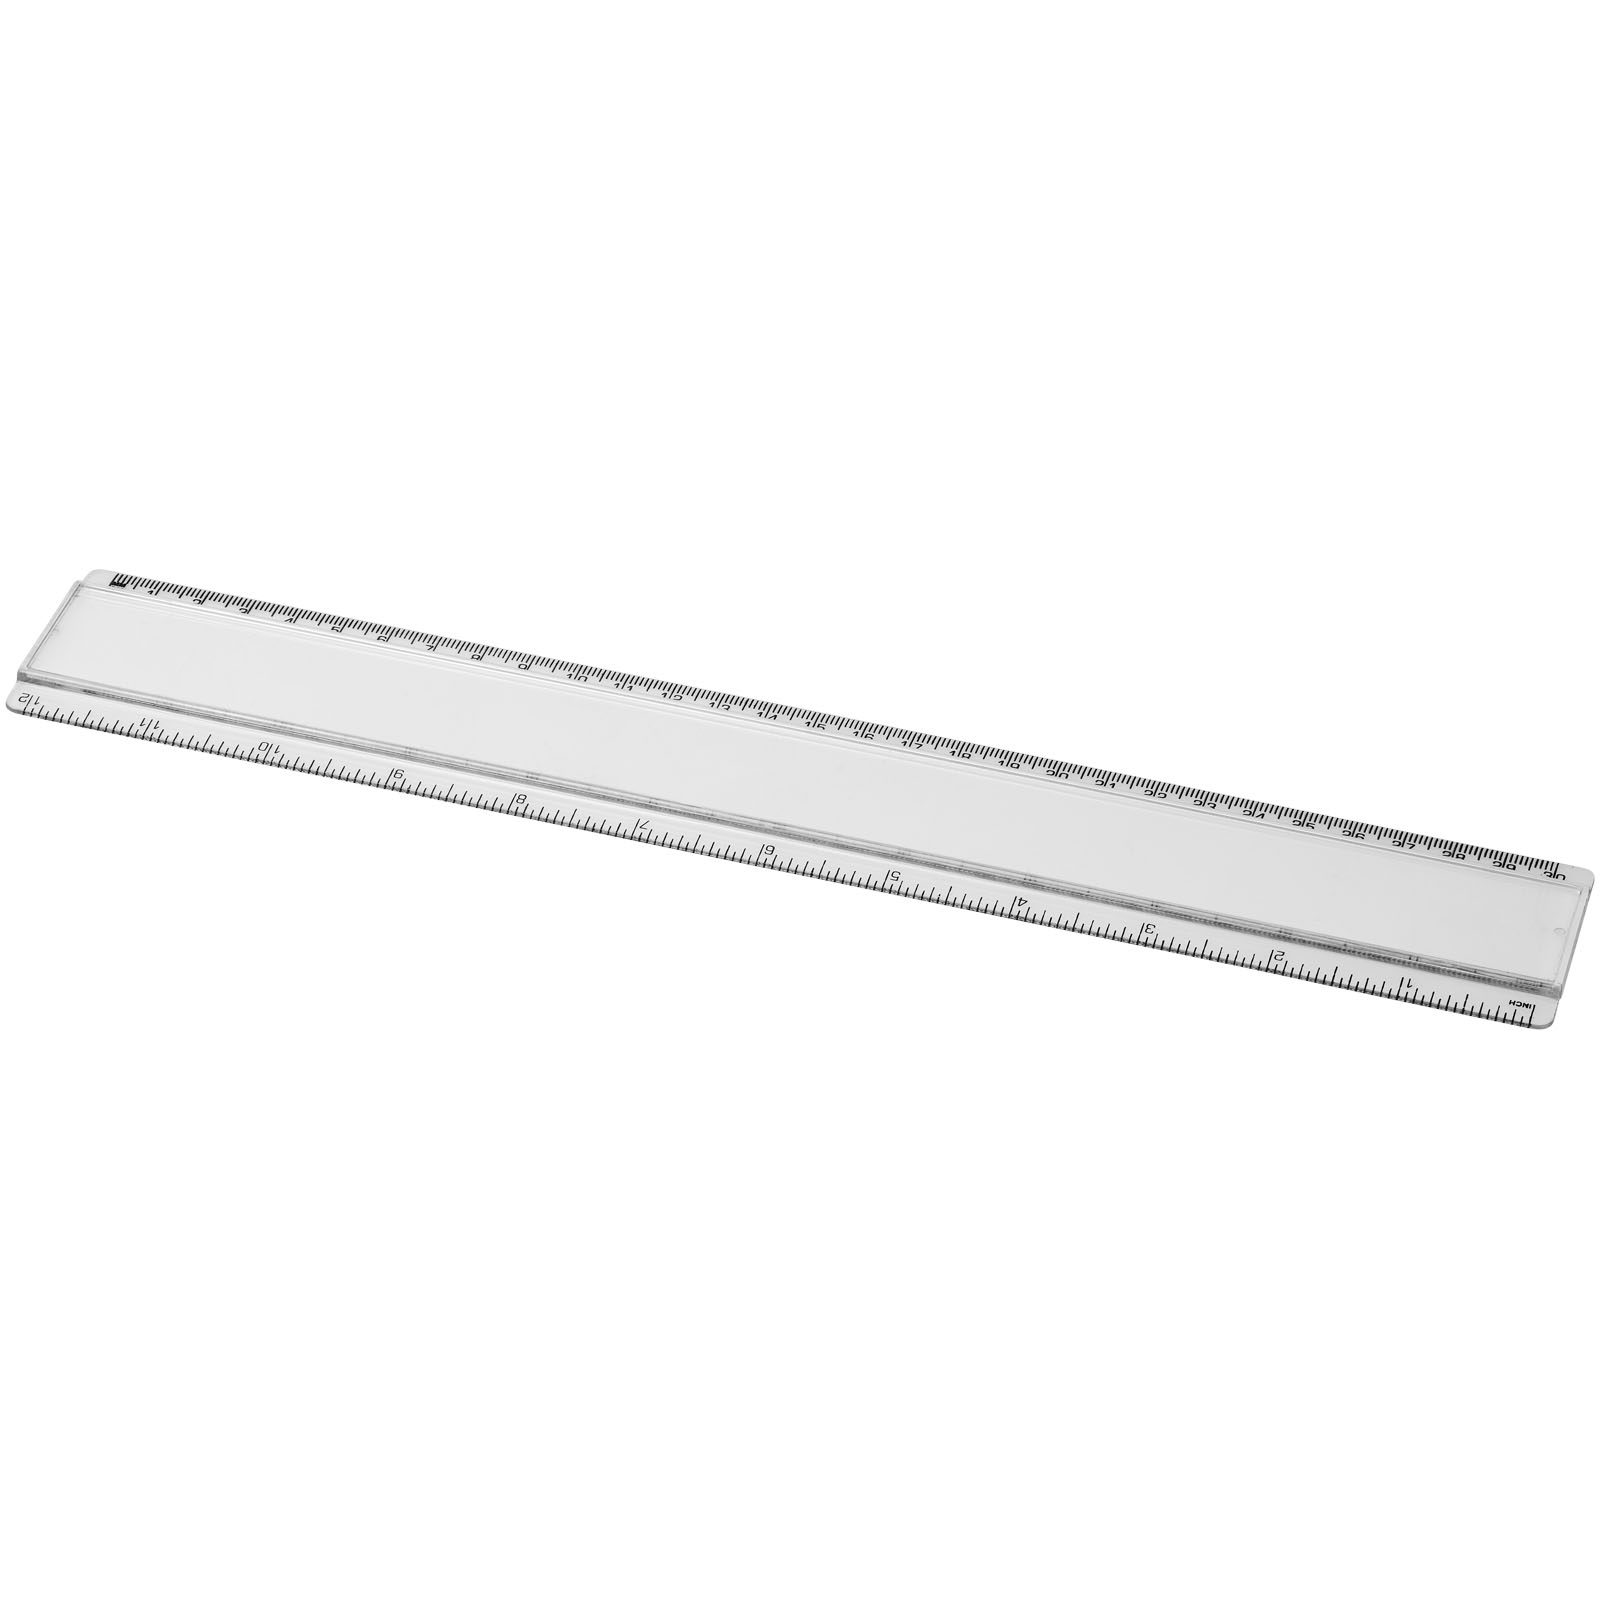 Advertising Desk Accessories - Ellison 30 cm plastic insert ruler